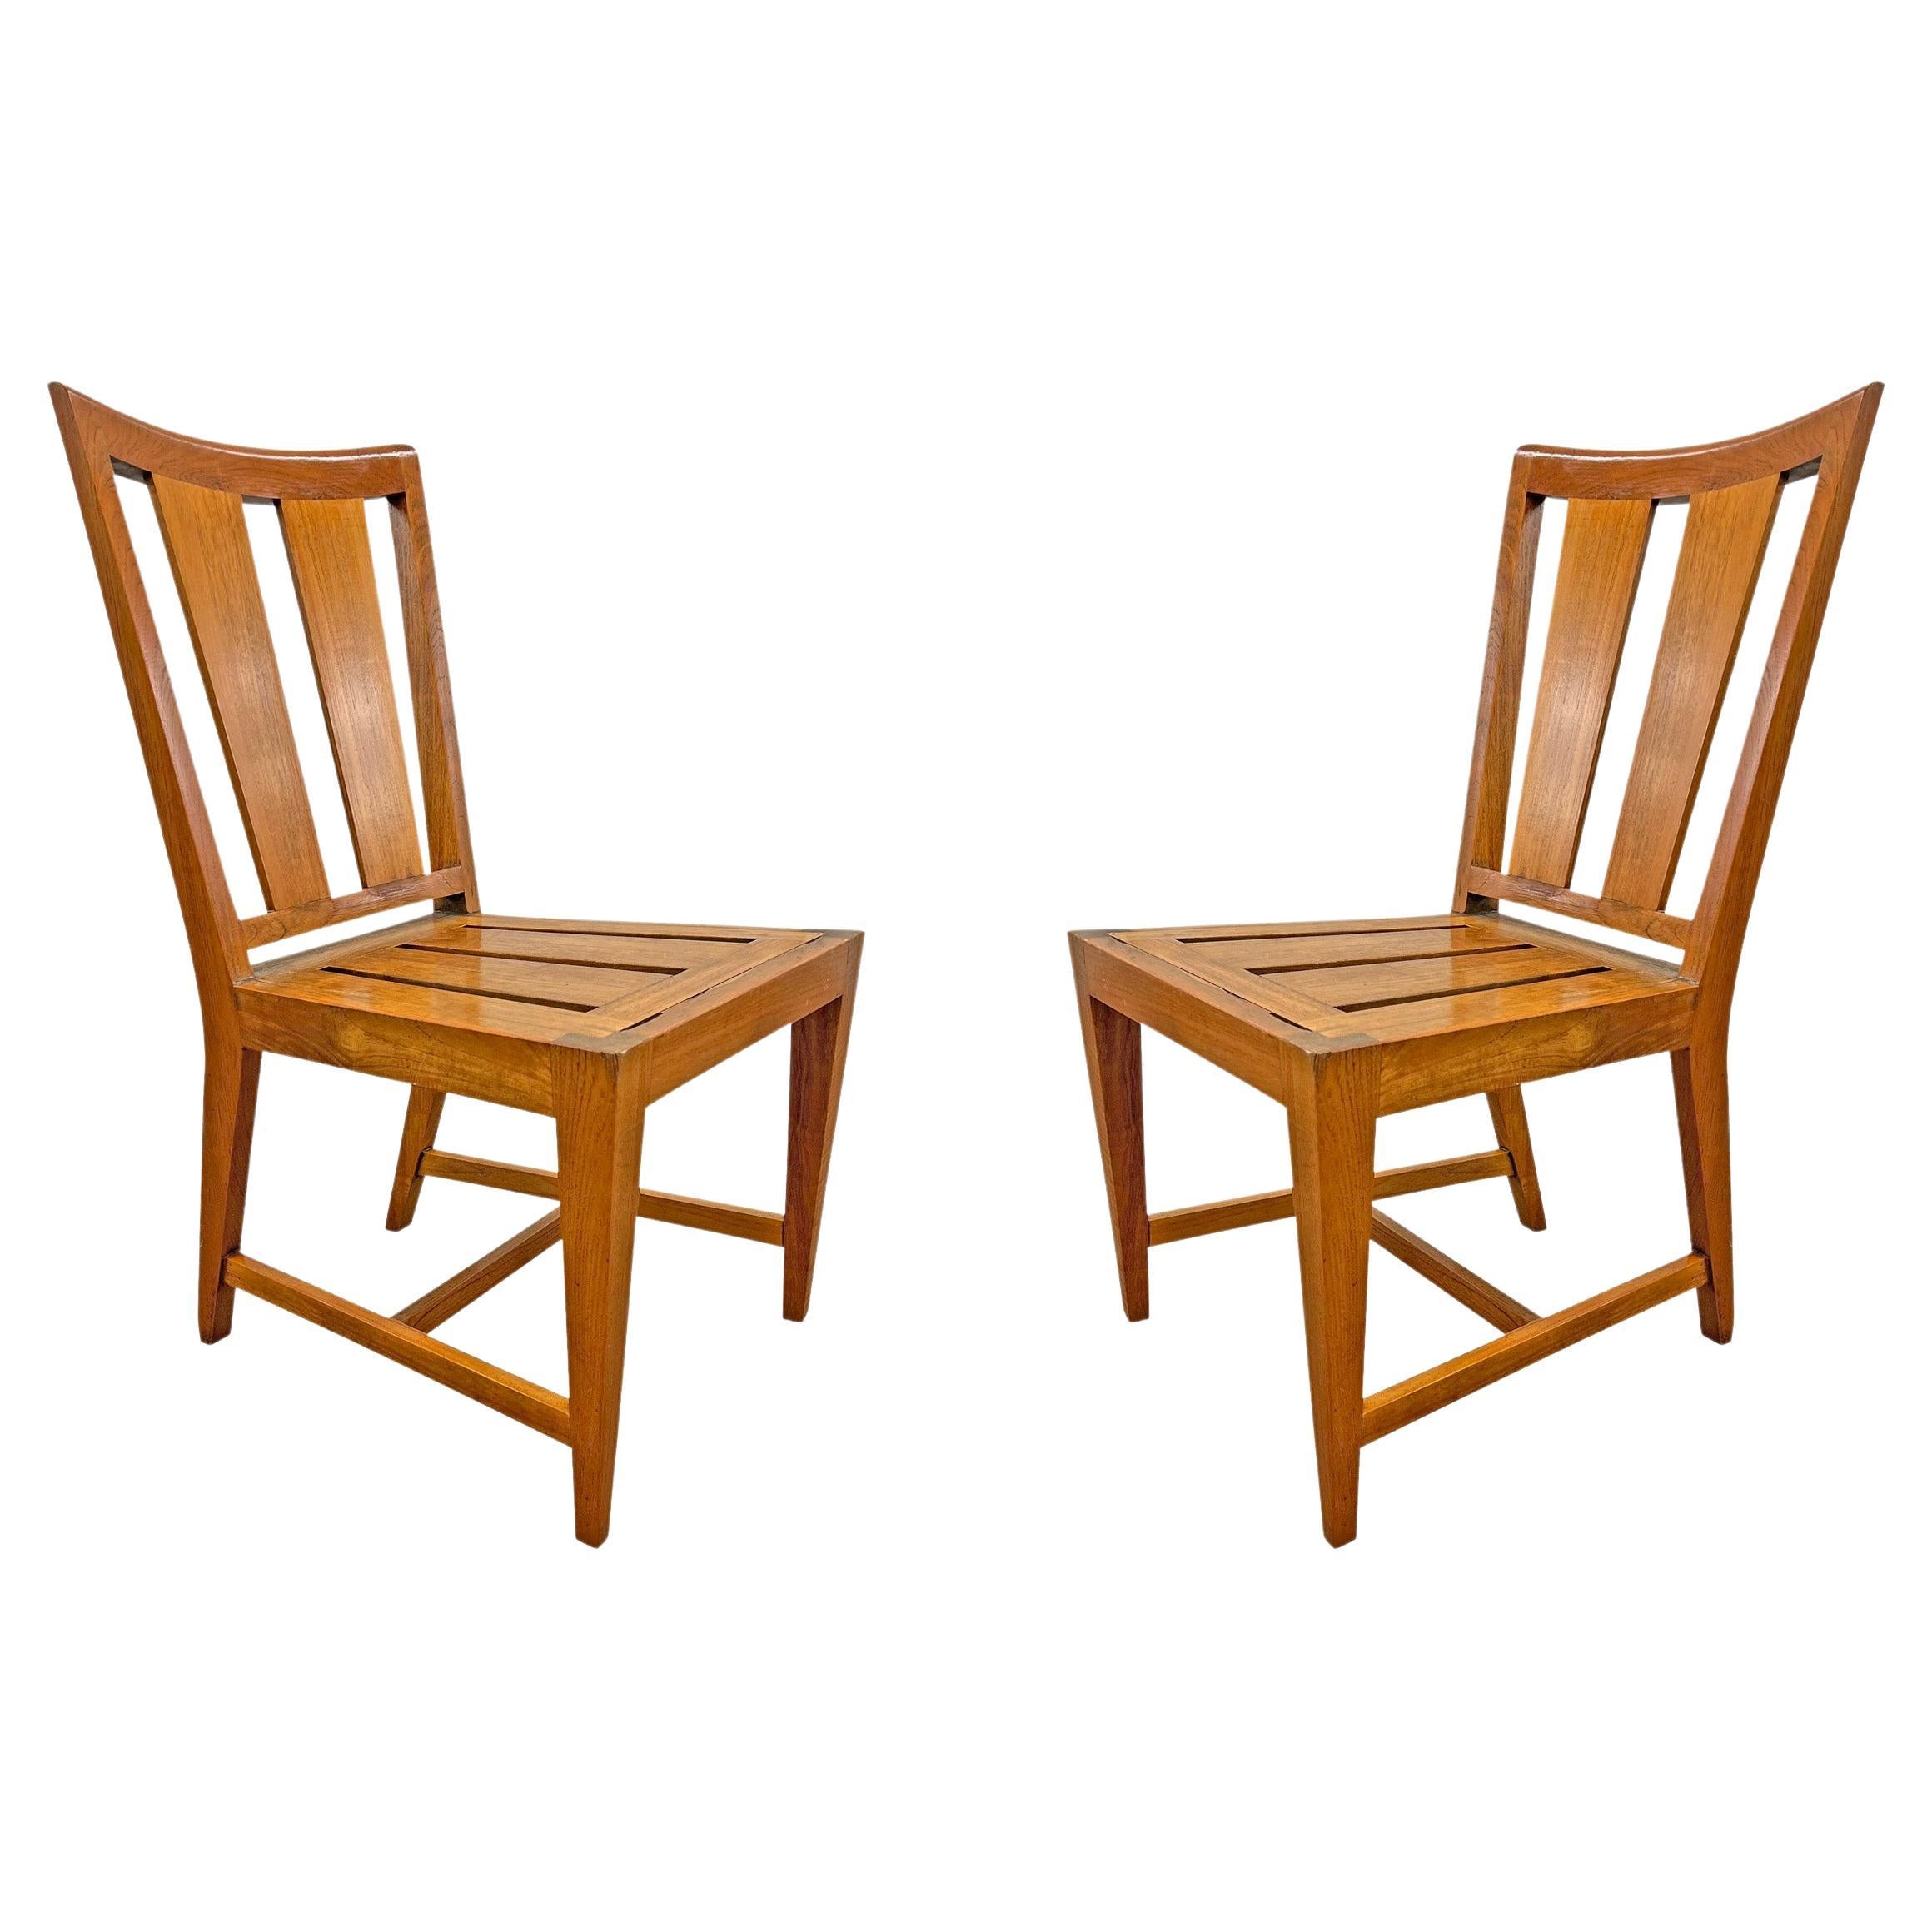 Pair of Teak Modernist Side Chairs